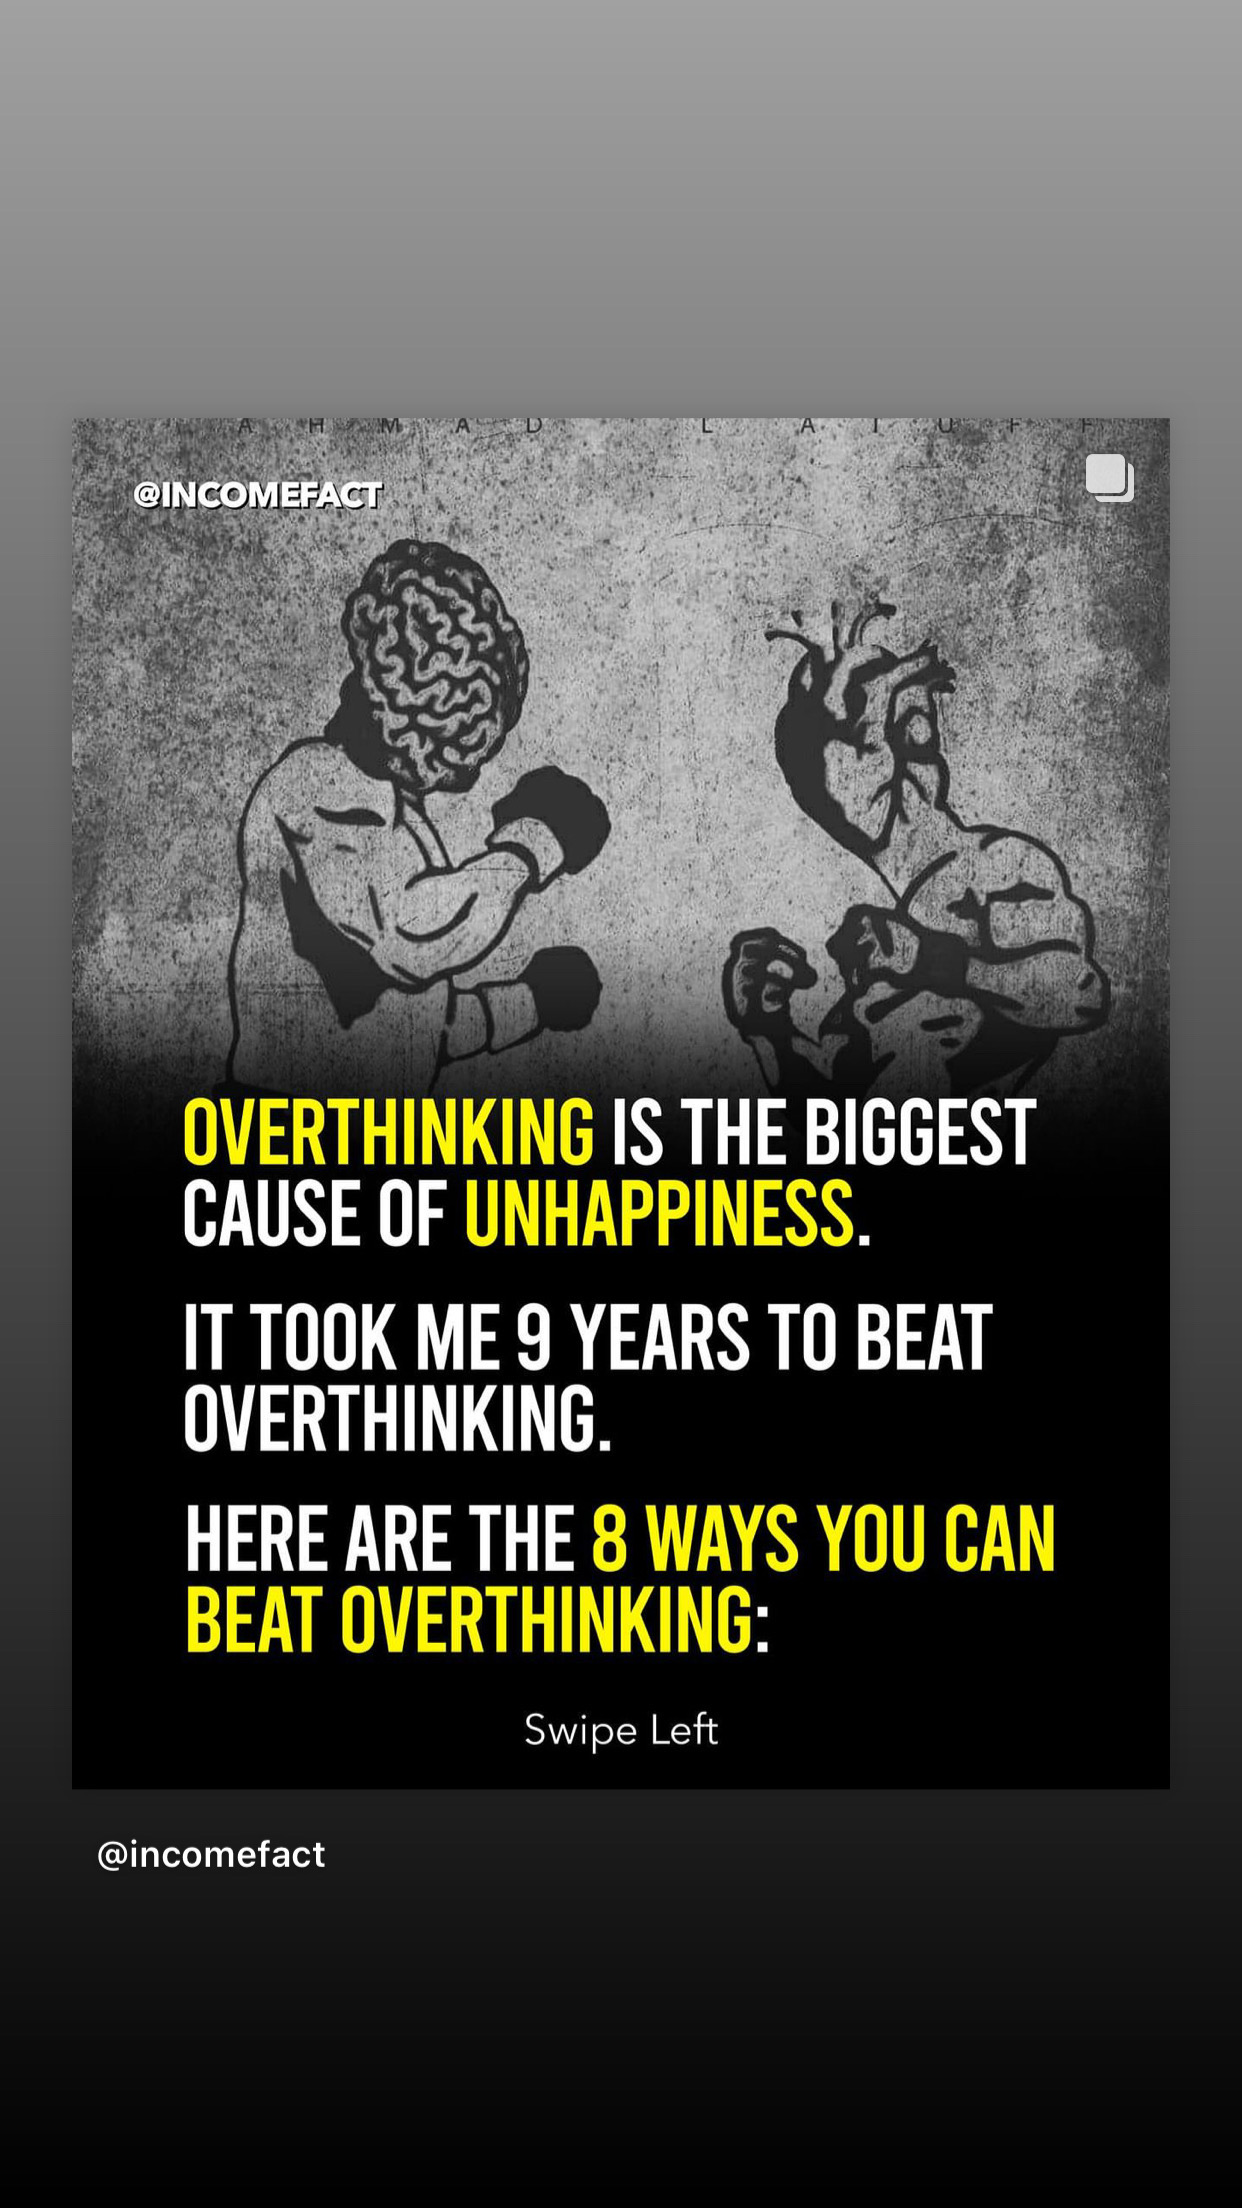 8 ways to overcome overthinking